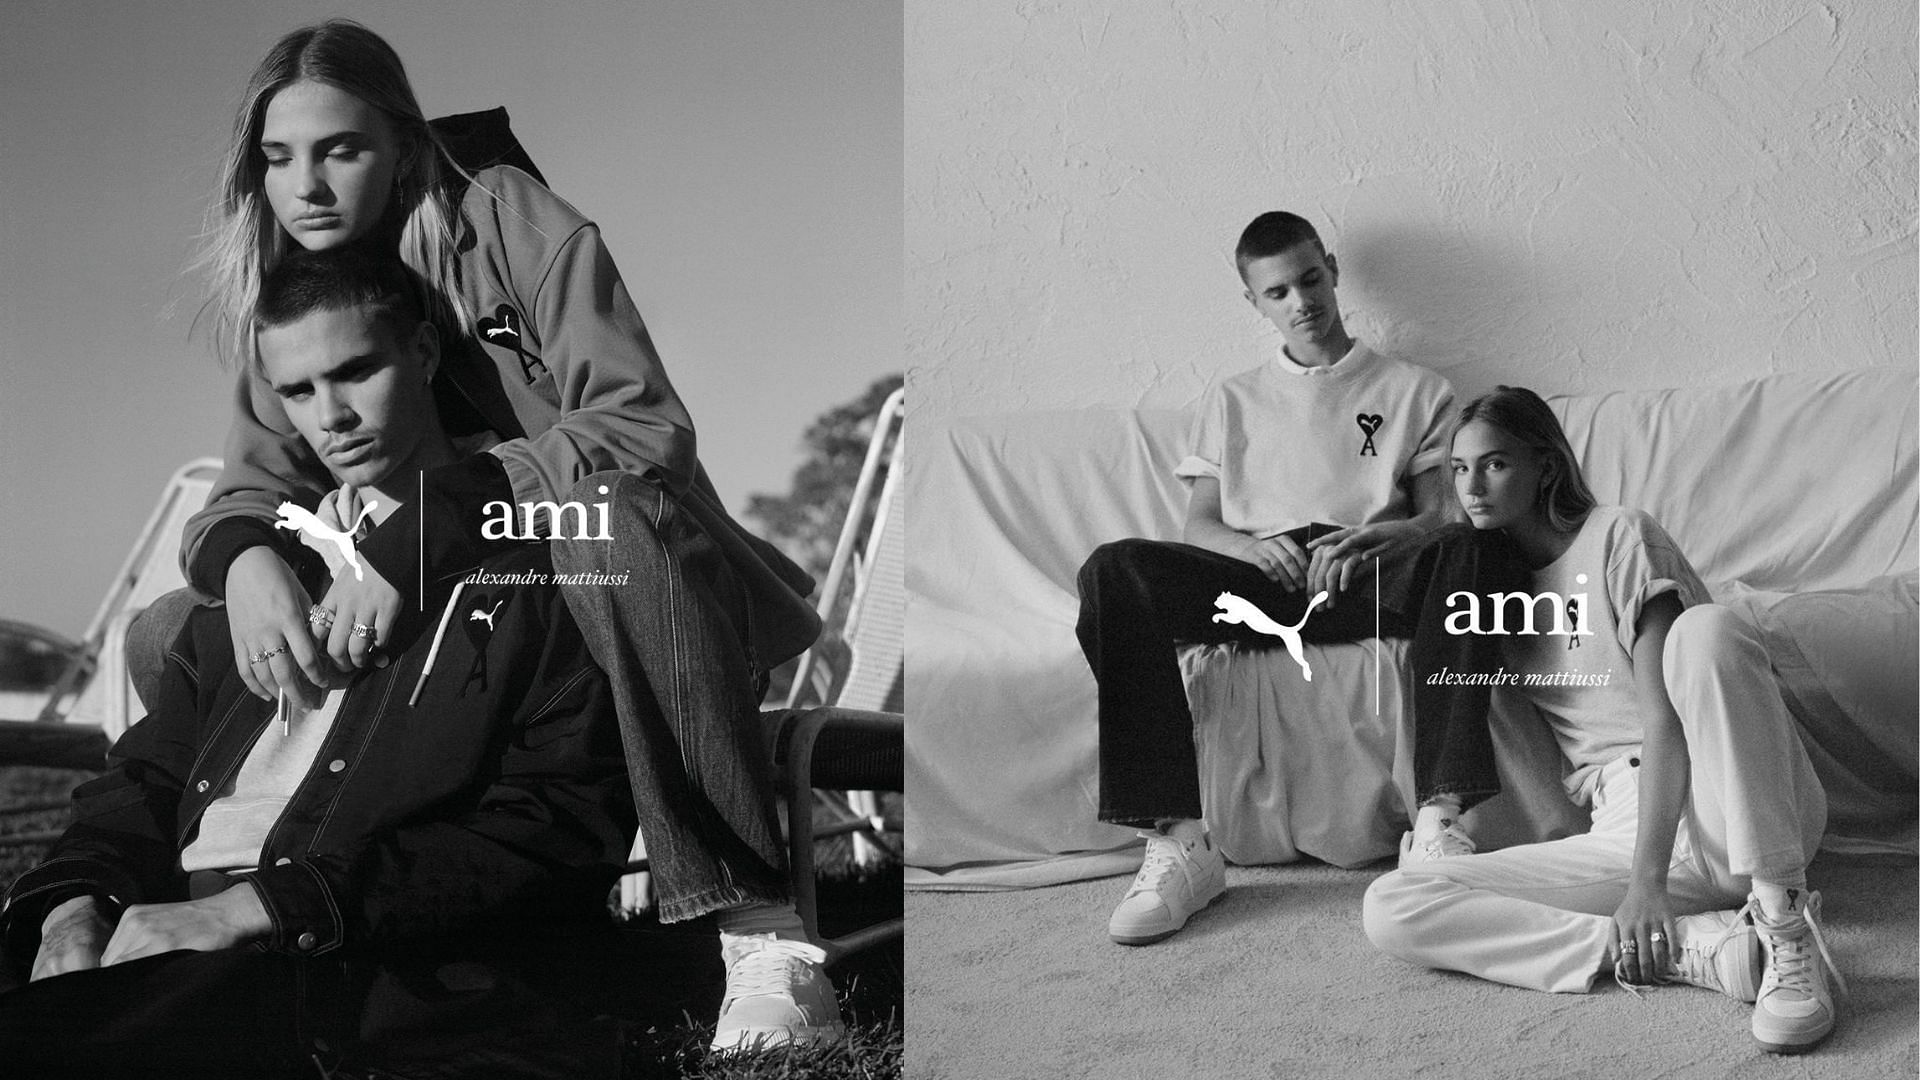 AMI Paris x Puma collaboration (Image via @amiparis/Instagram)